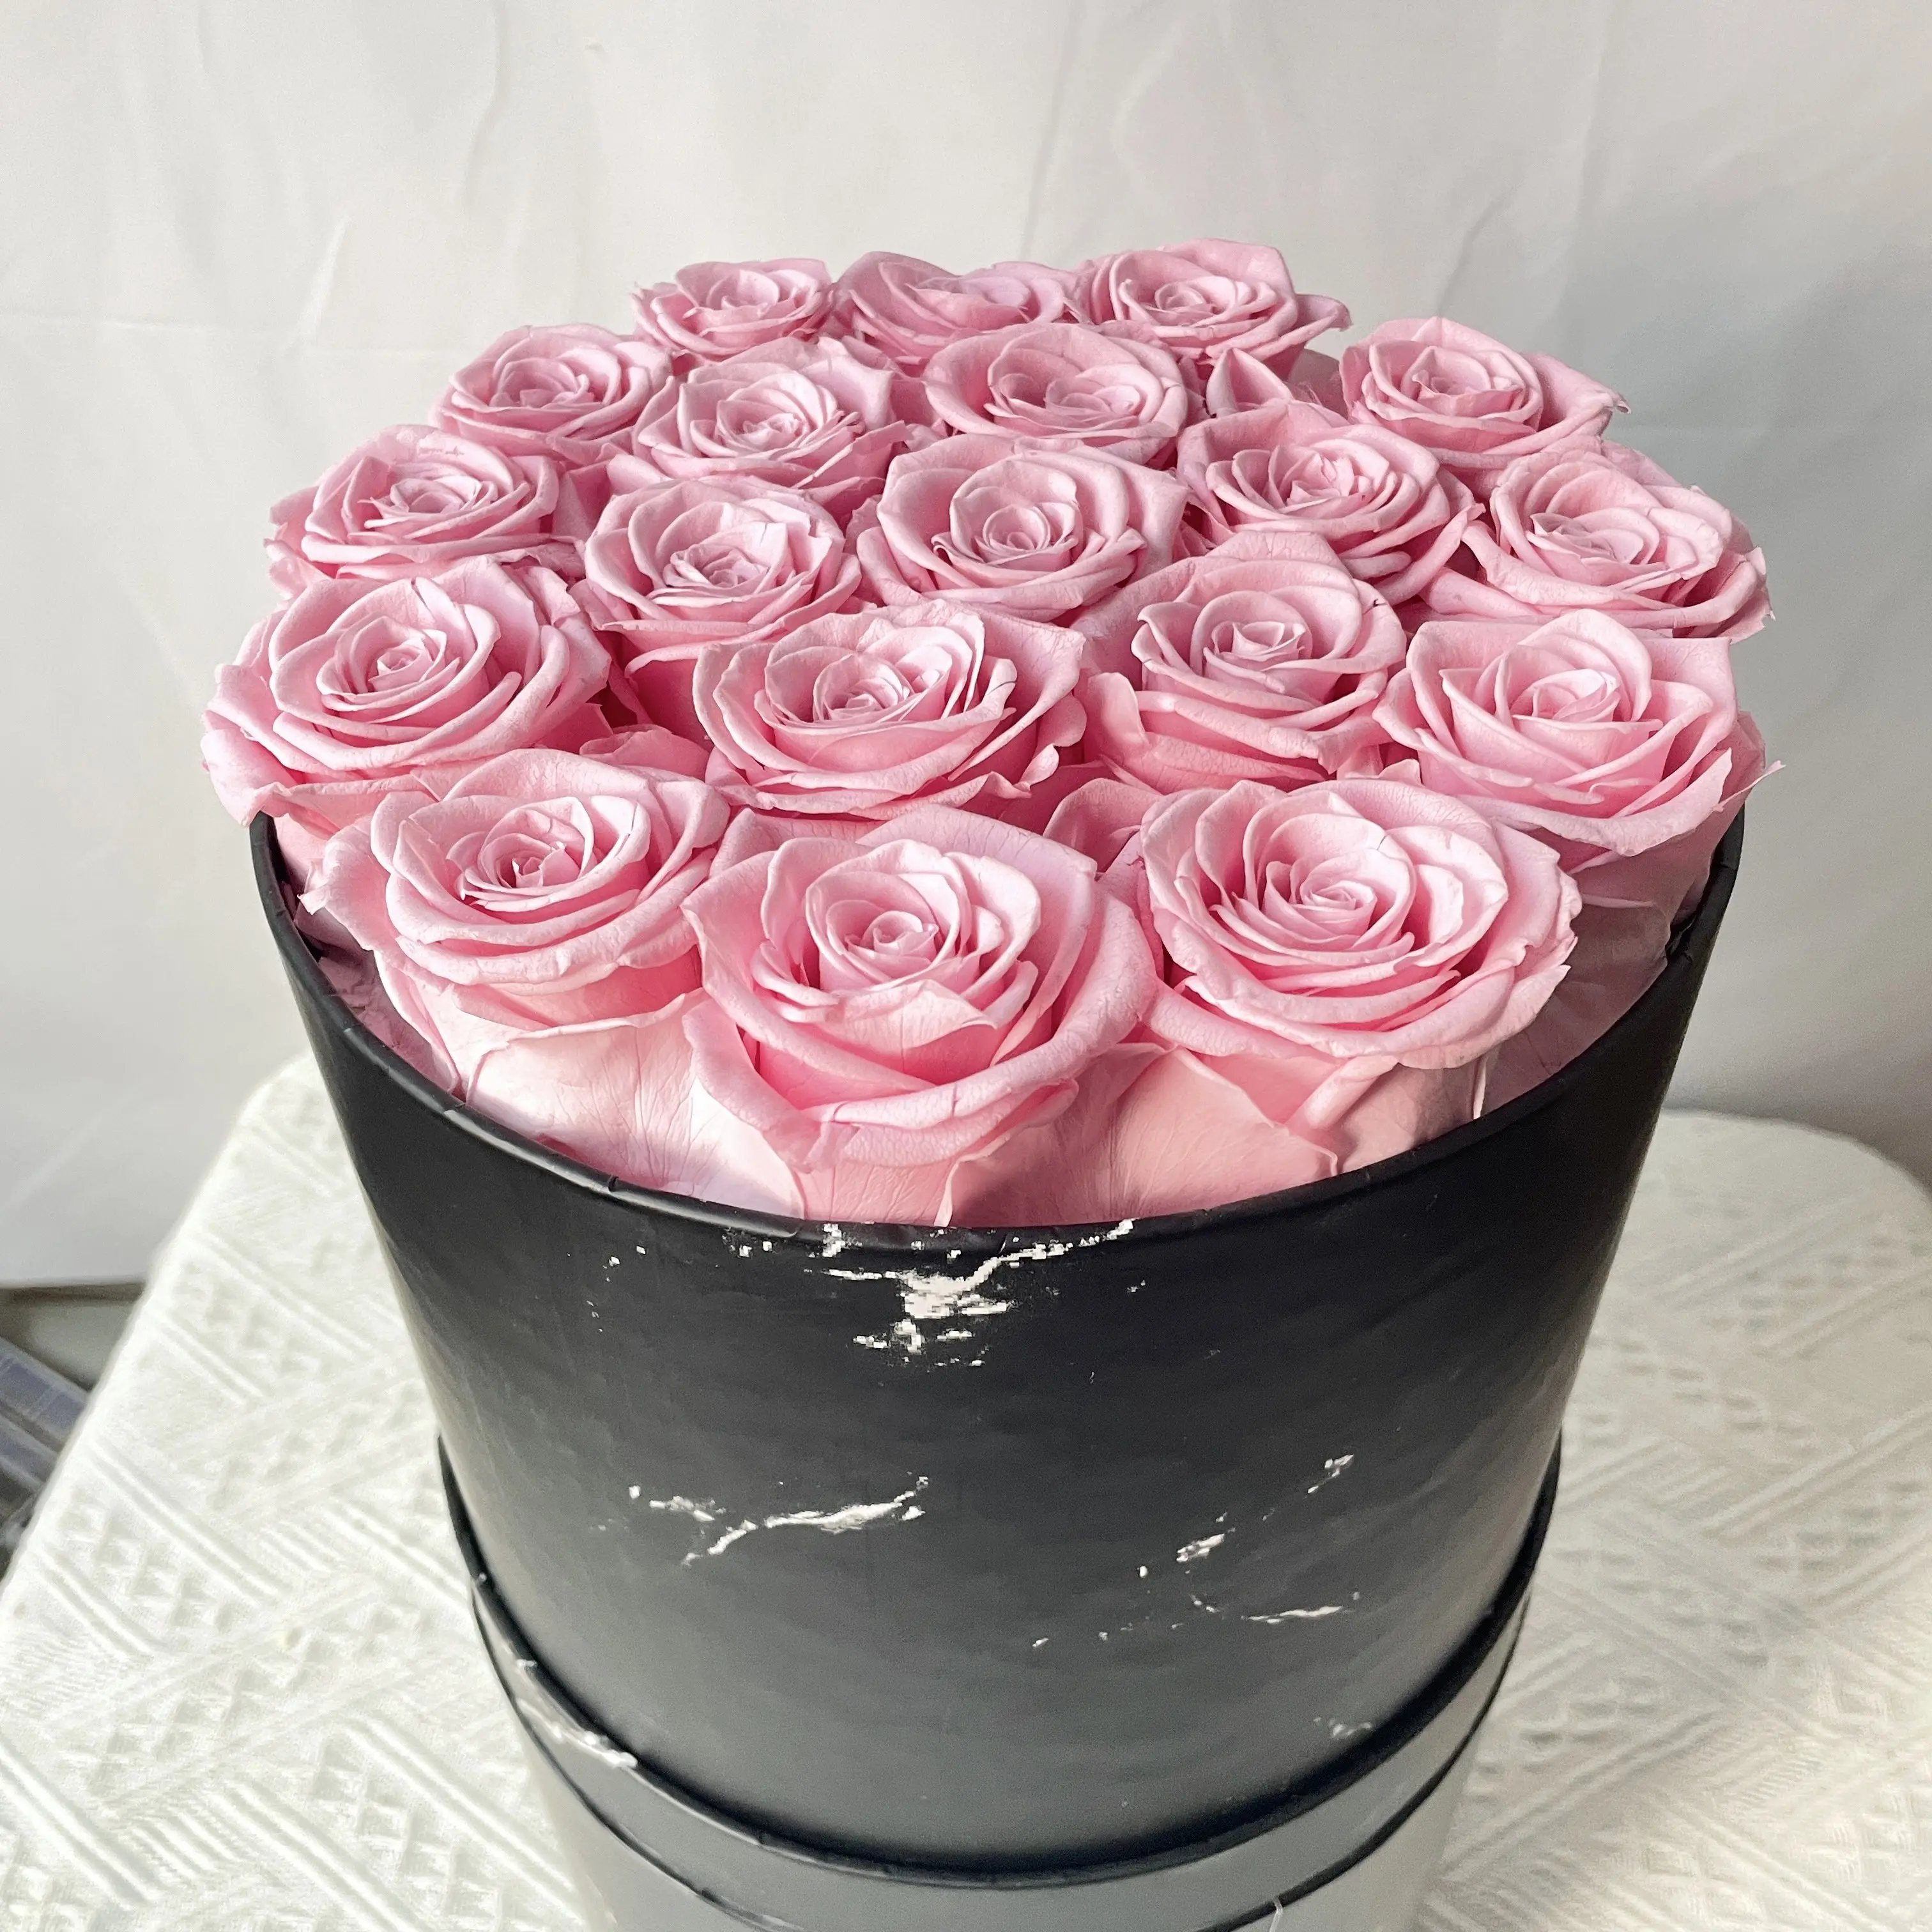 immortal eternal forever flowers Box preseved rose flower bouquet For Best Gift